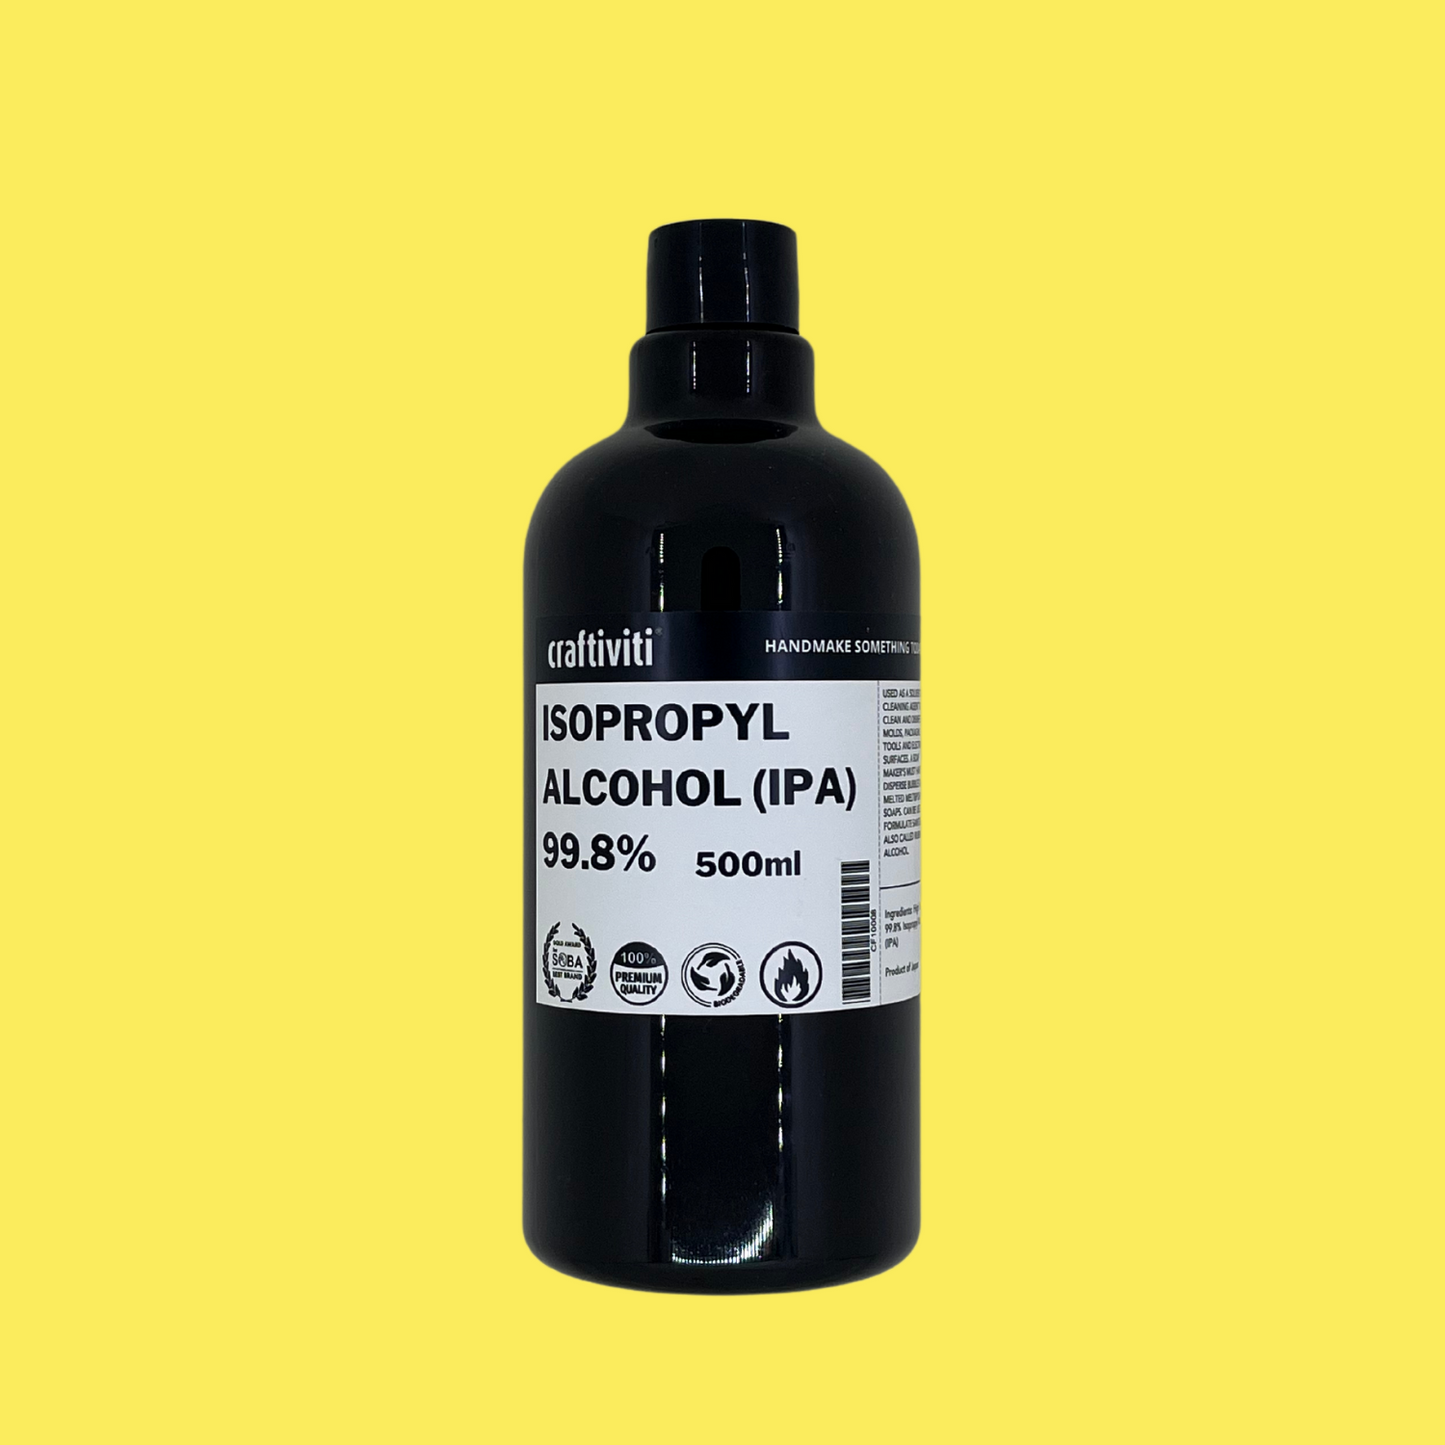 Isopropyl Alcohol 99.8% (IPA)